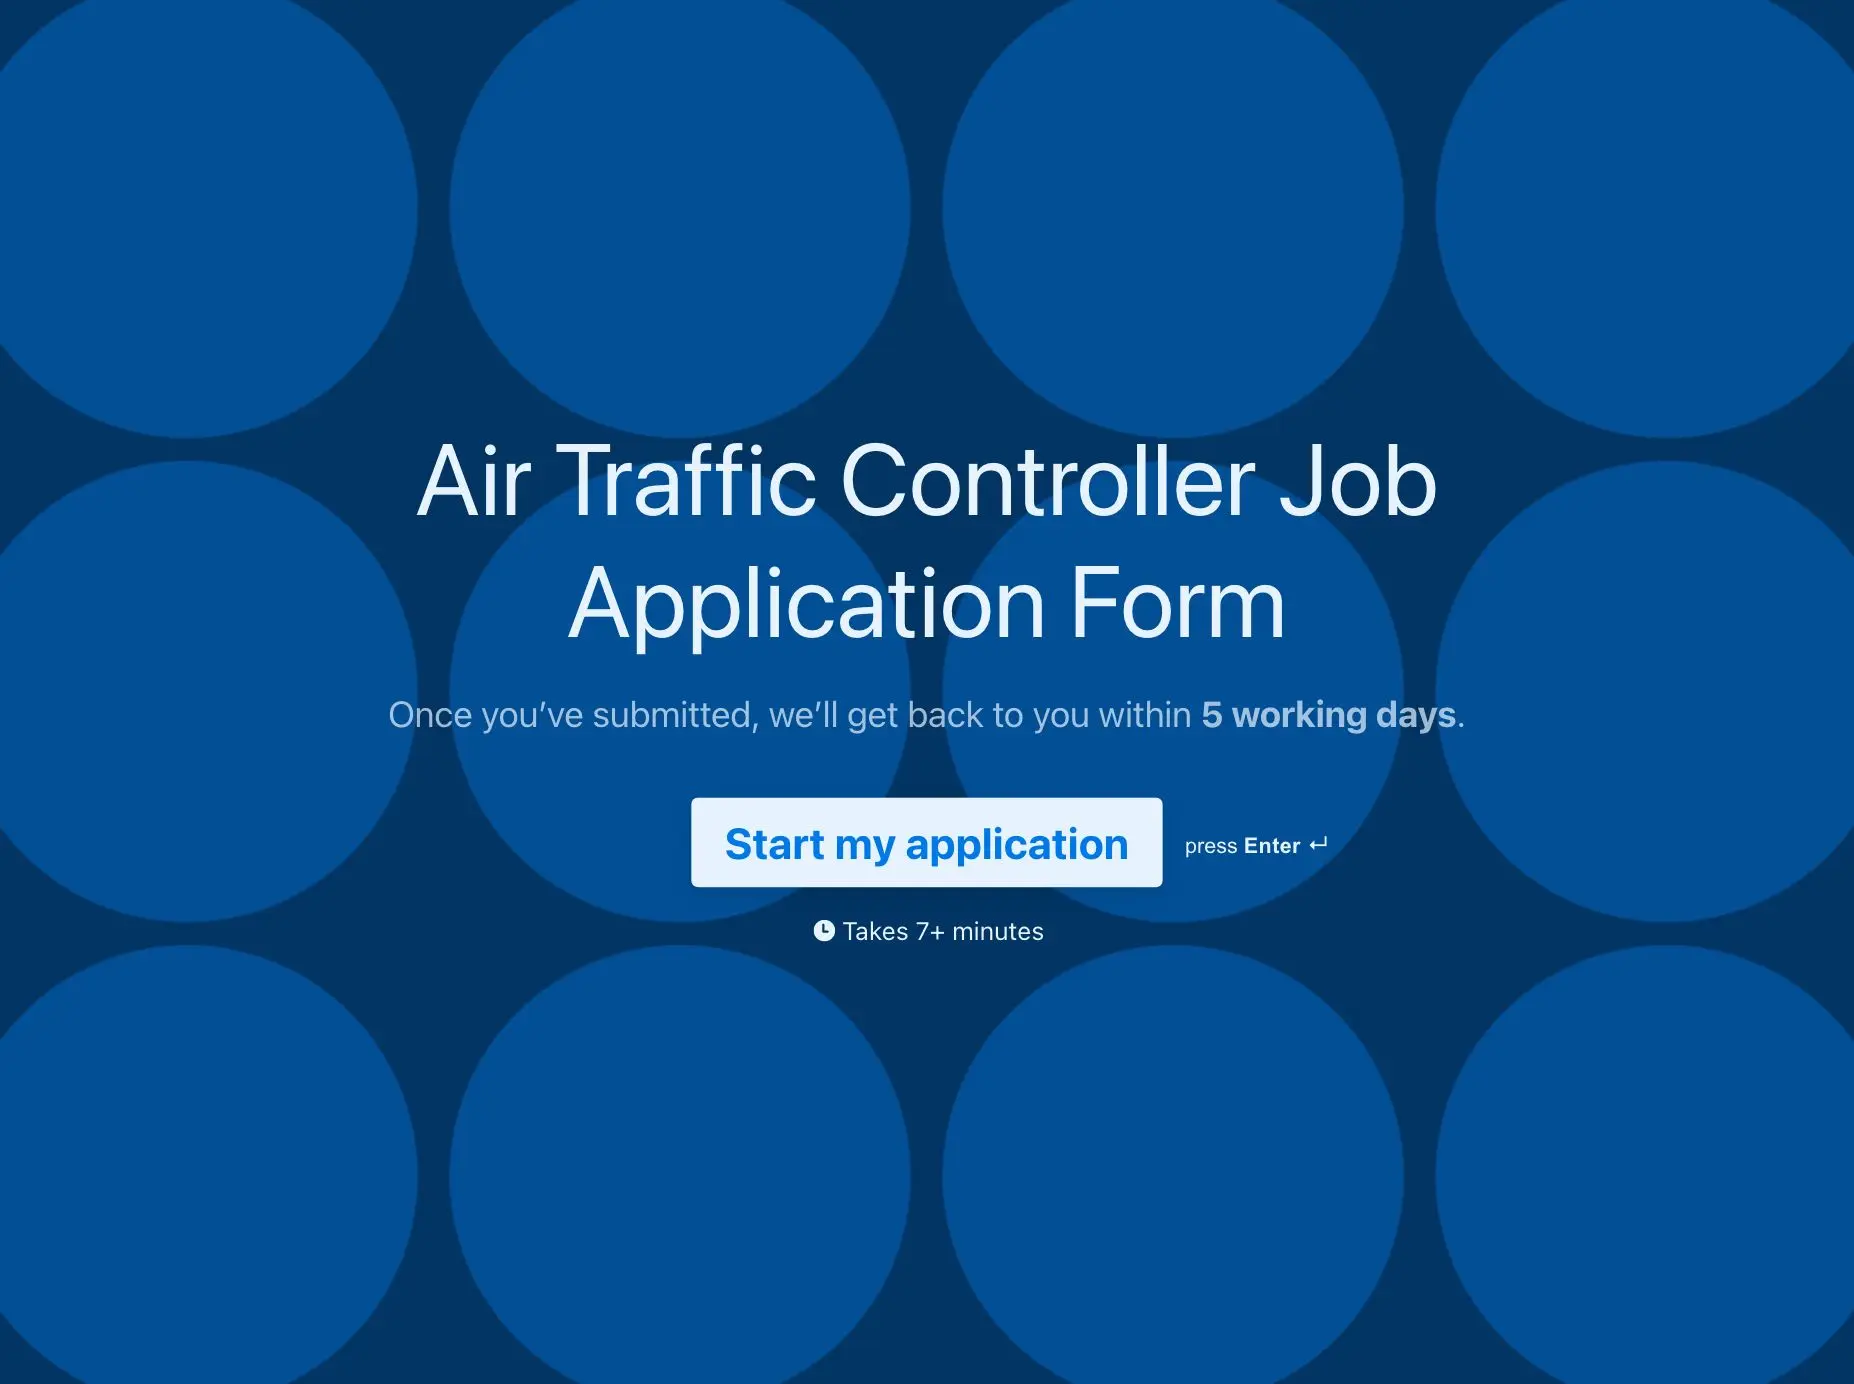 Air Traffic Controller Job Application Form Template Hero